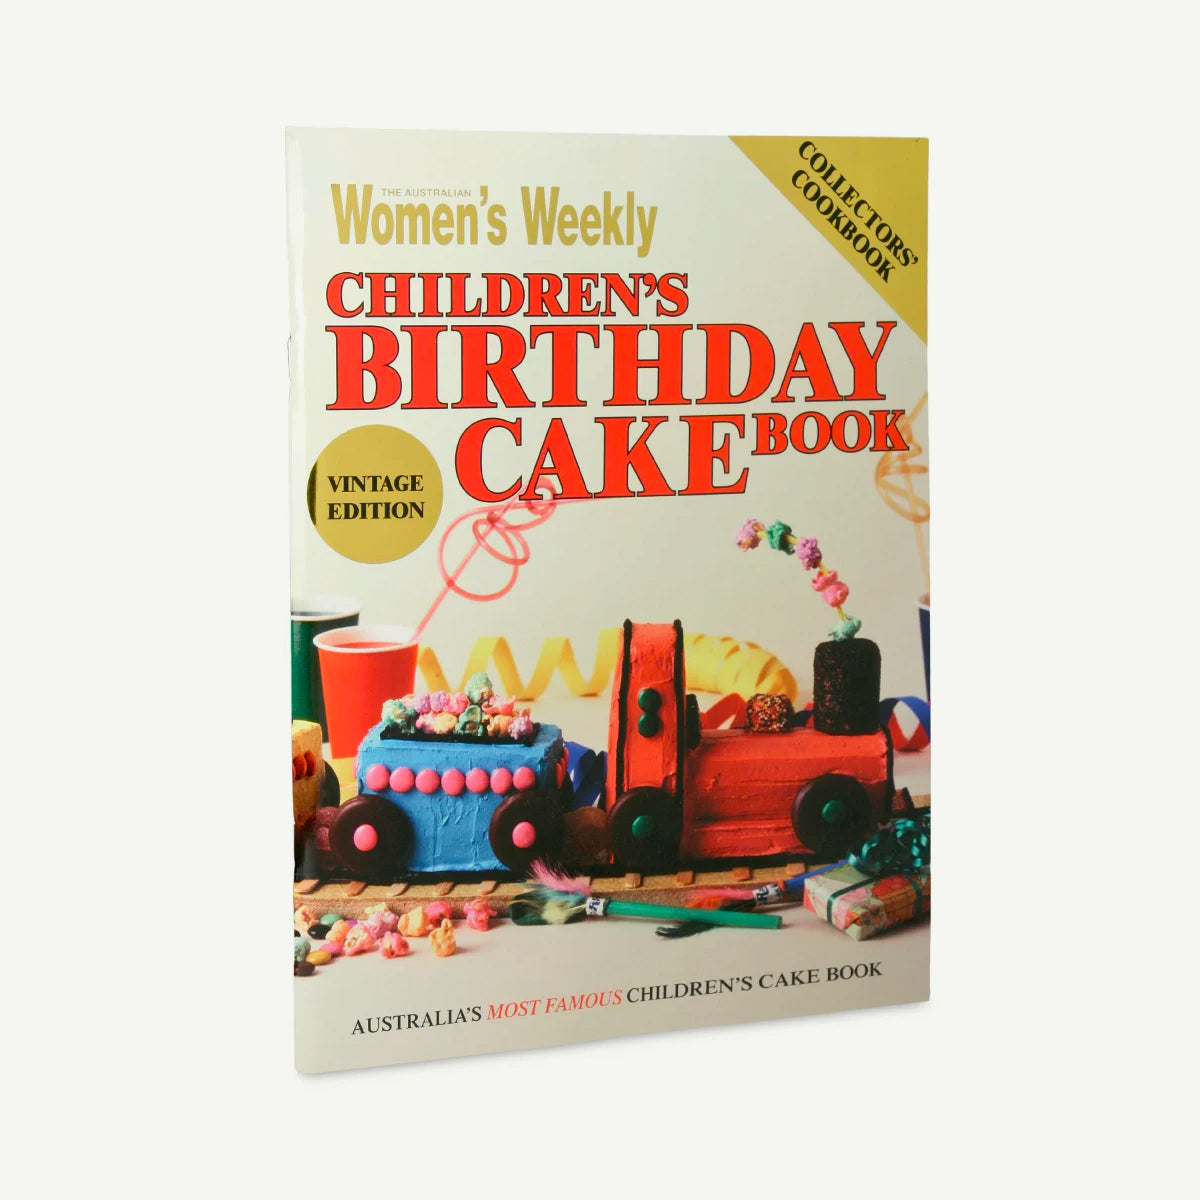 Children's Birthday Cake Book - Vintage Edition by the Australian Women's Weekly